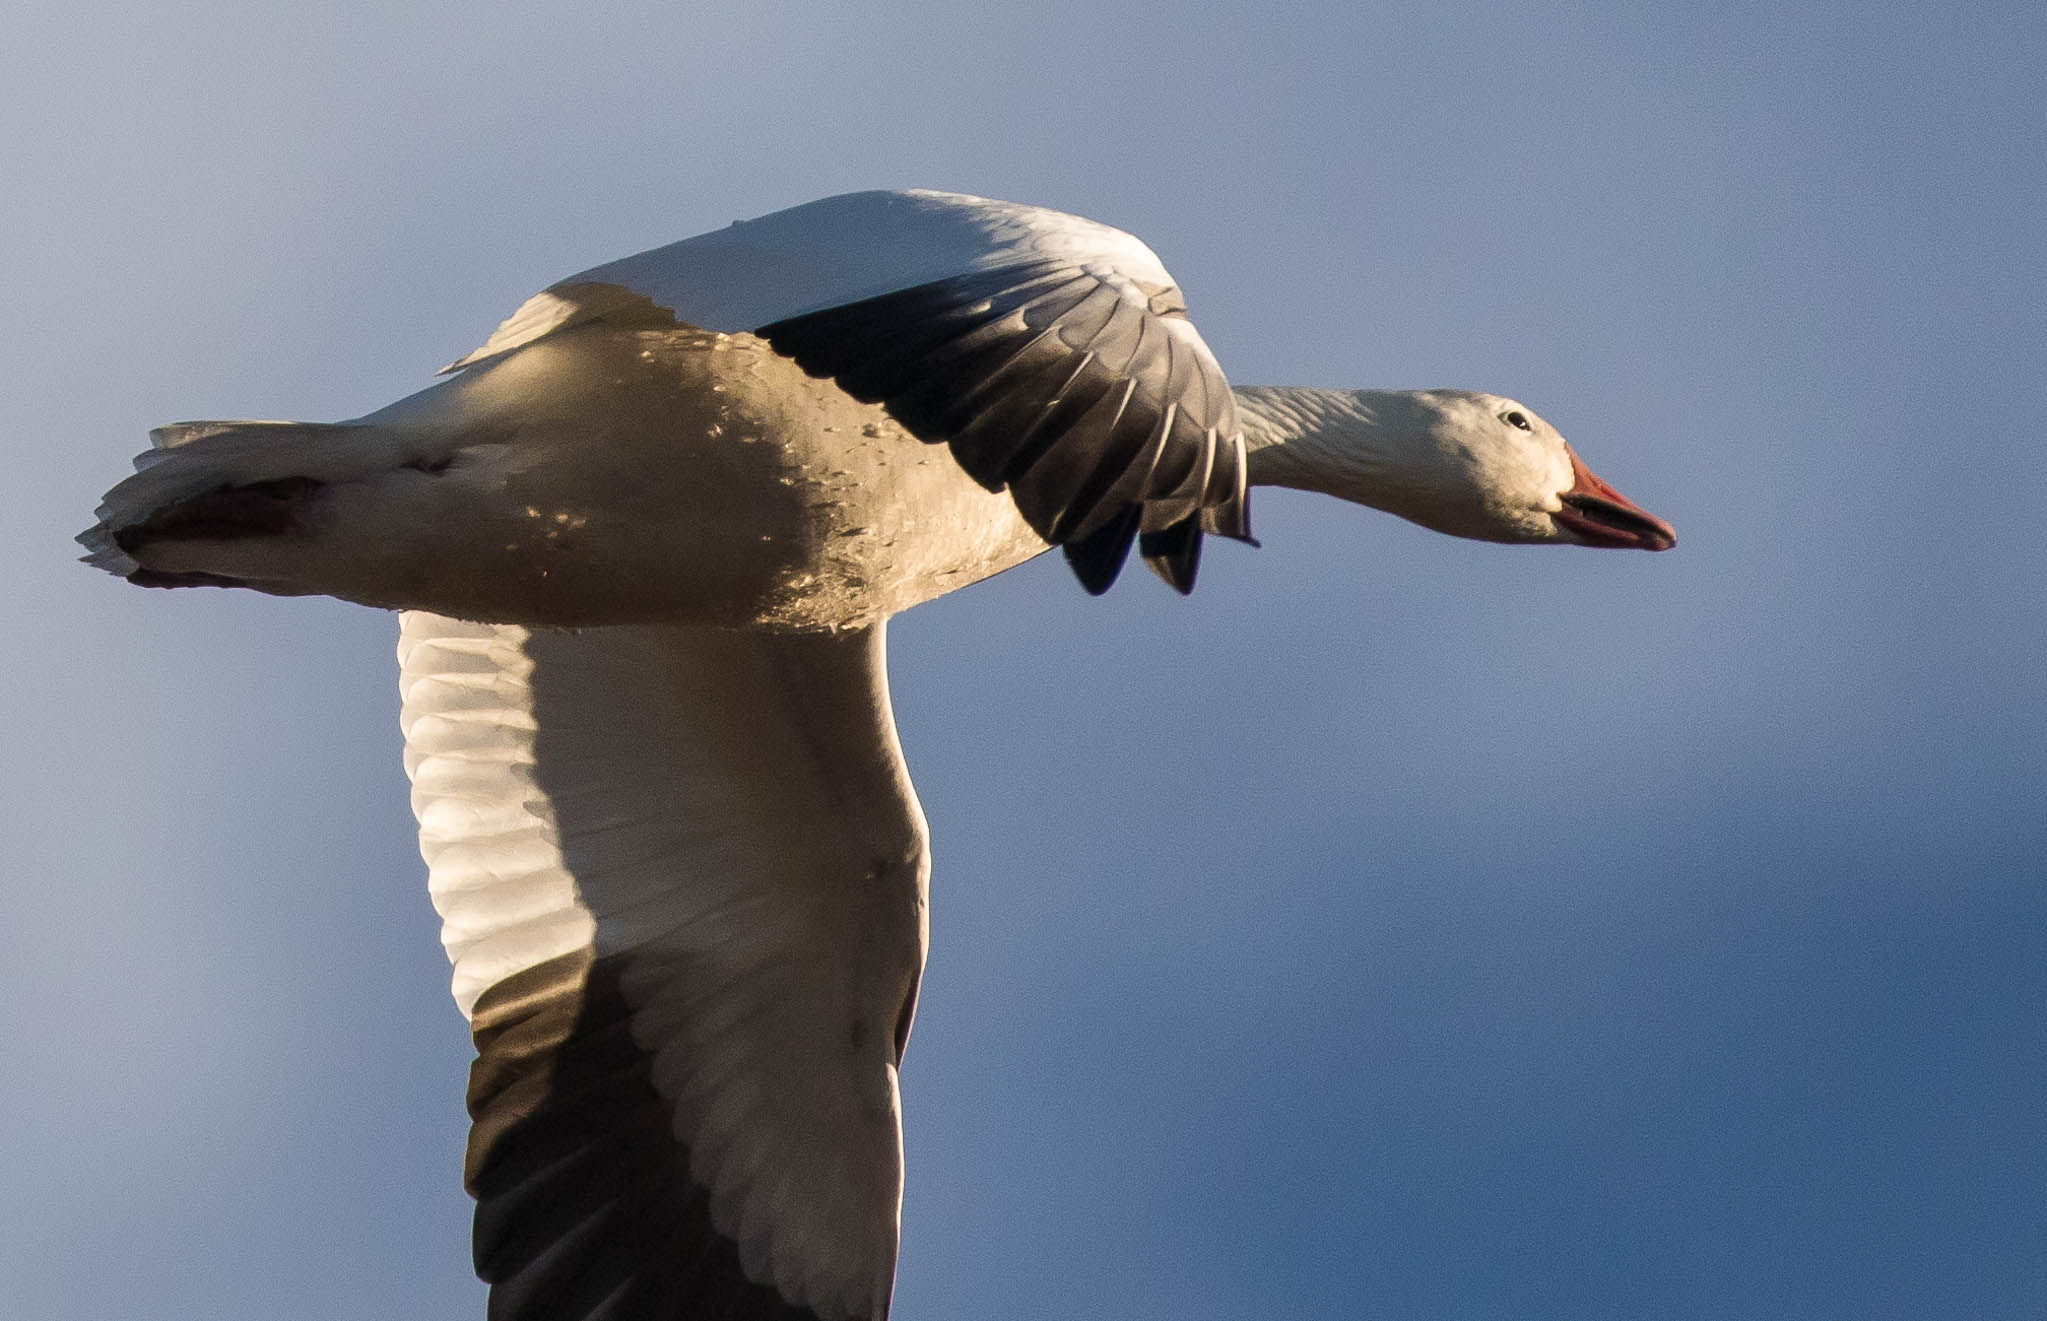 Snow Goose flying, Bosque del Apache National Wildlife Refuge, San Antonio NM, November 30, 2014